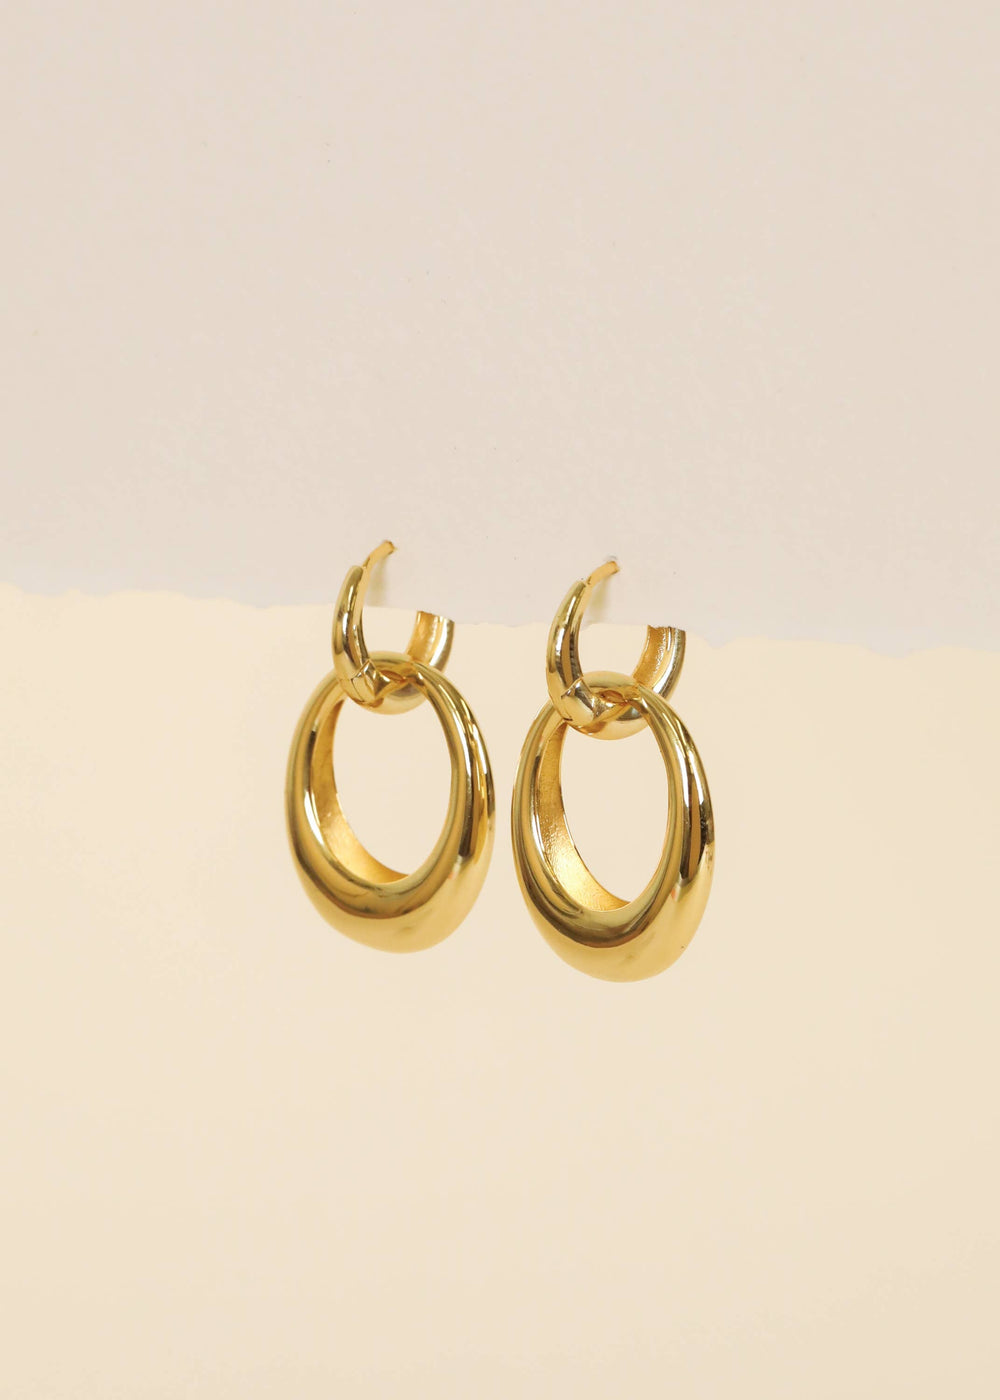 JaxKelly Earrings Coupled Hoop - Earring